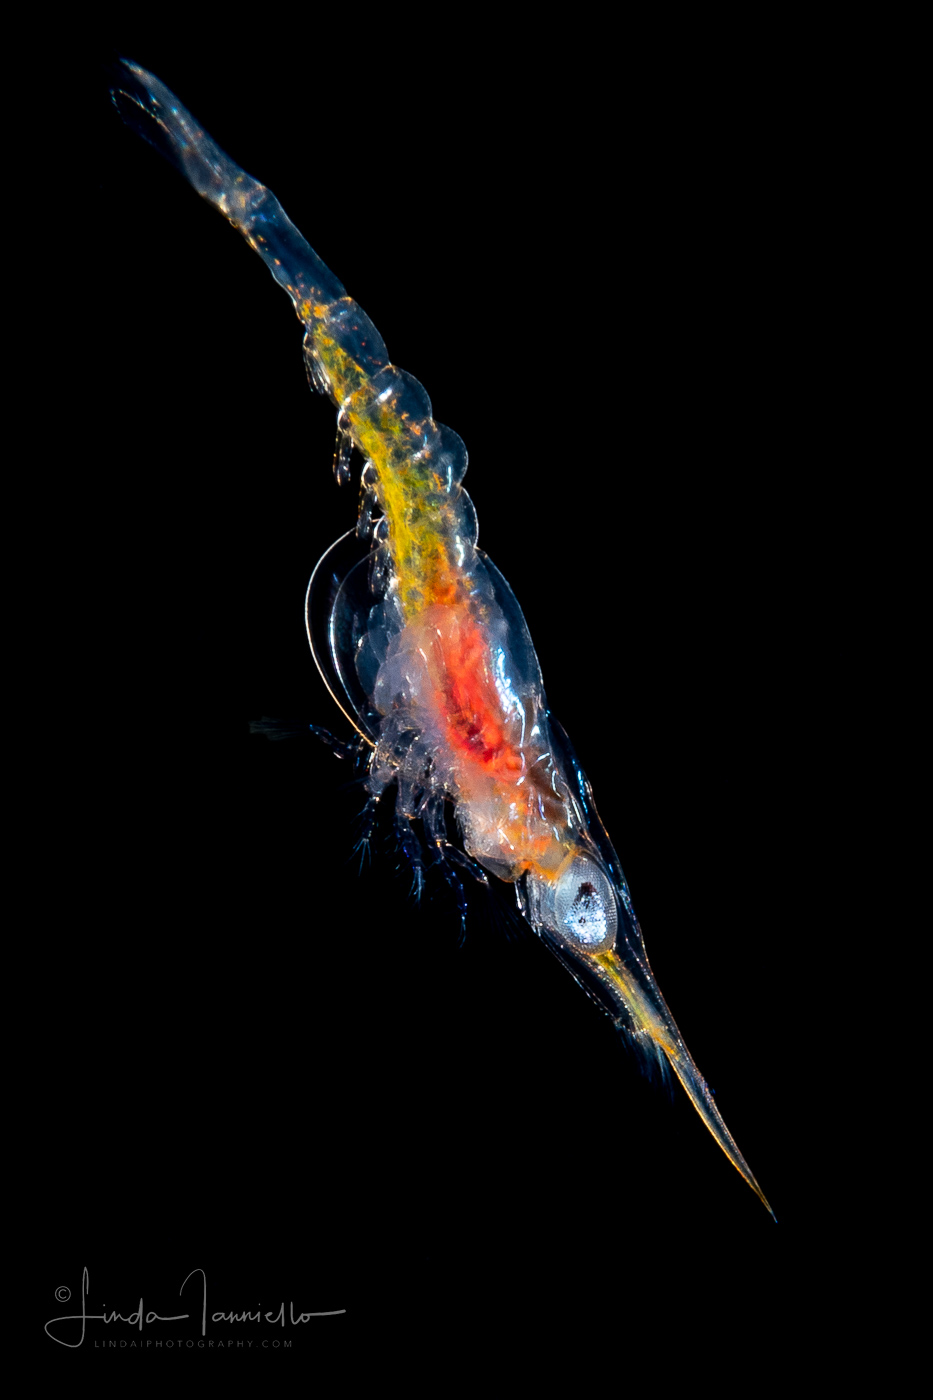 Shrimp - Zoea larval stage of a decapod shrimp